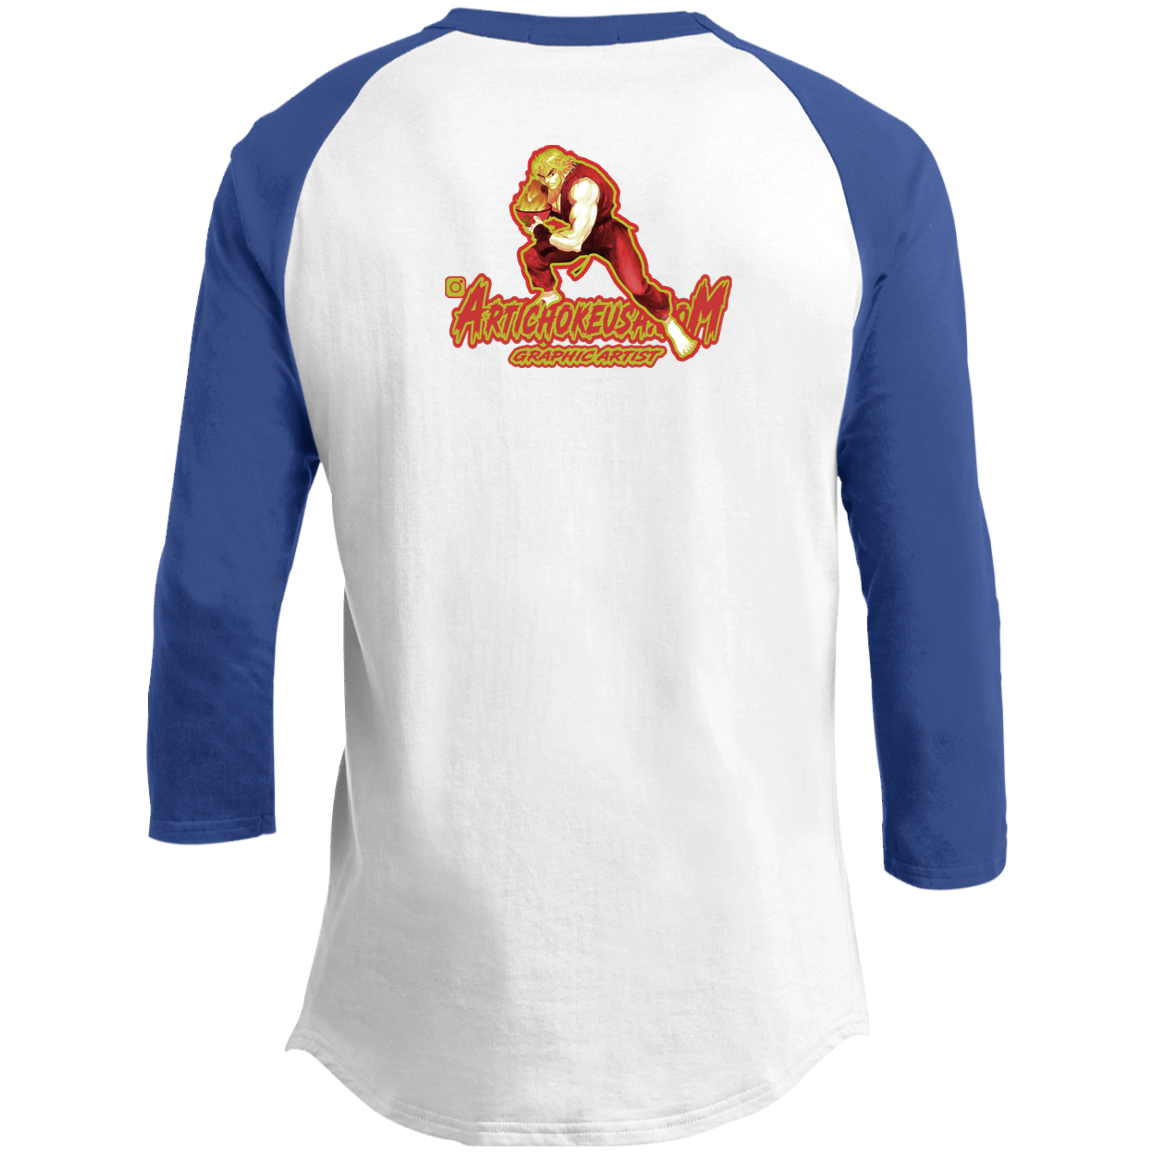 ArtichokeUSA Custom Design. Pho Ken Artichoke. Street Fighter Parody. Gaming. 3/4 Raglan Sleeve Shirt